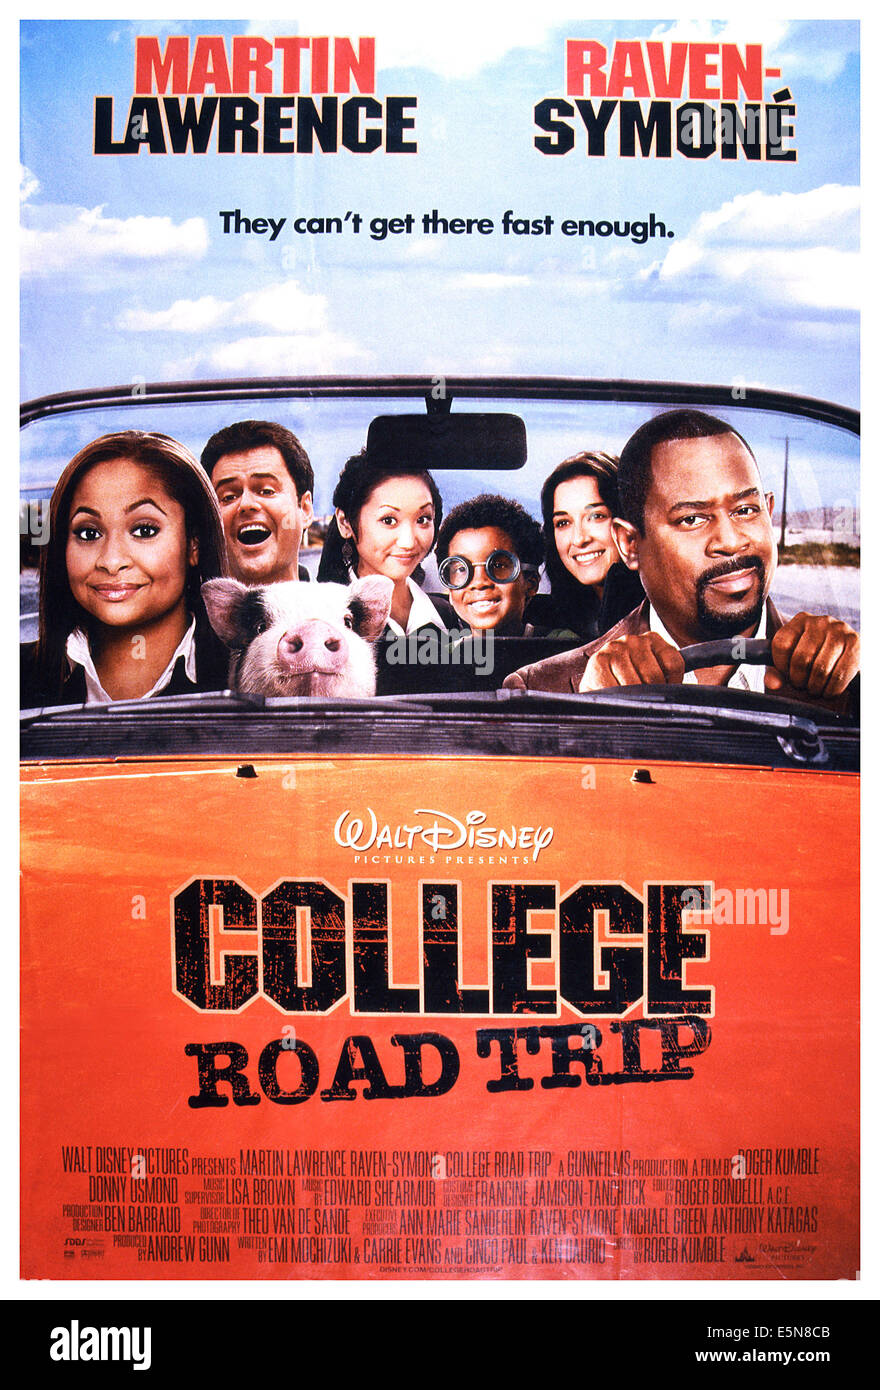 COLLEGE ROAD TRIP, U.S. poster, front: Raven Symone, Albert the pig, Martin Lawrence; back: Donny Osmond, Brenda Song, Eshaya Stock Photo